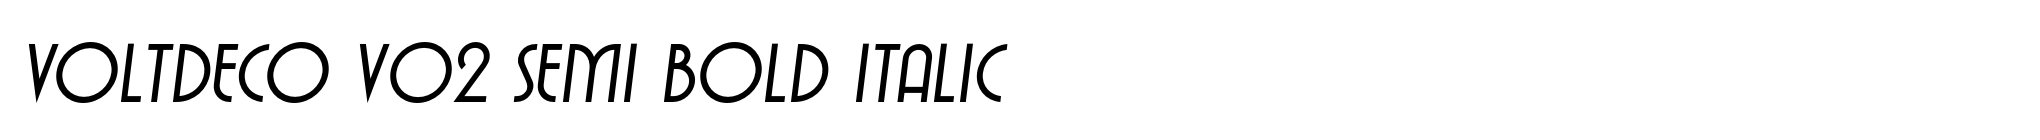 Voltdeco V02 Semi Bold Italic image